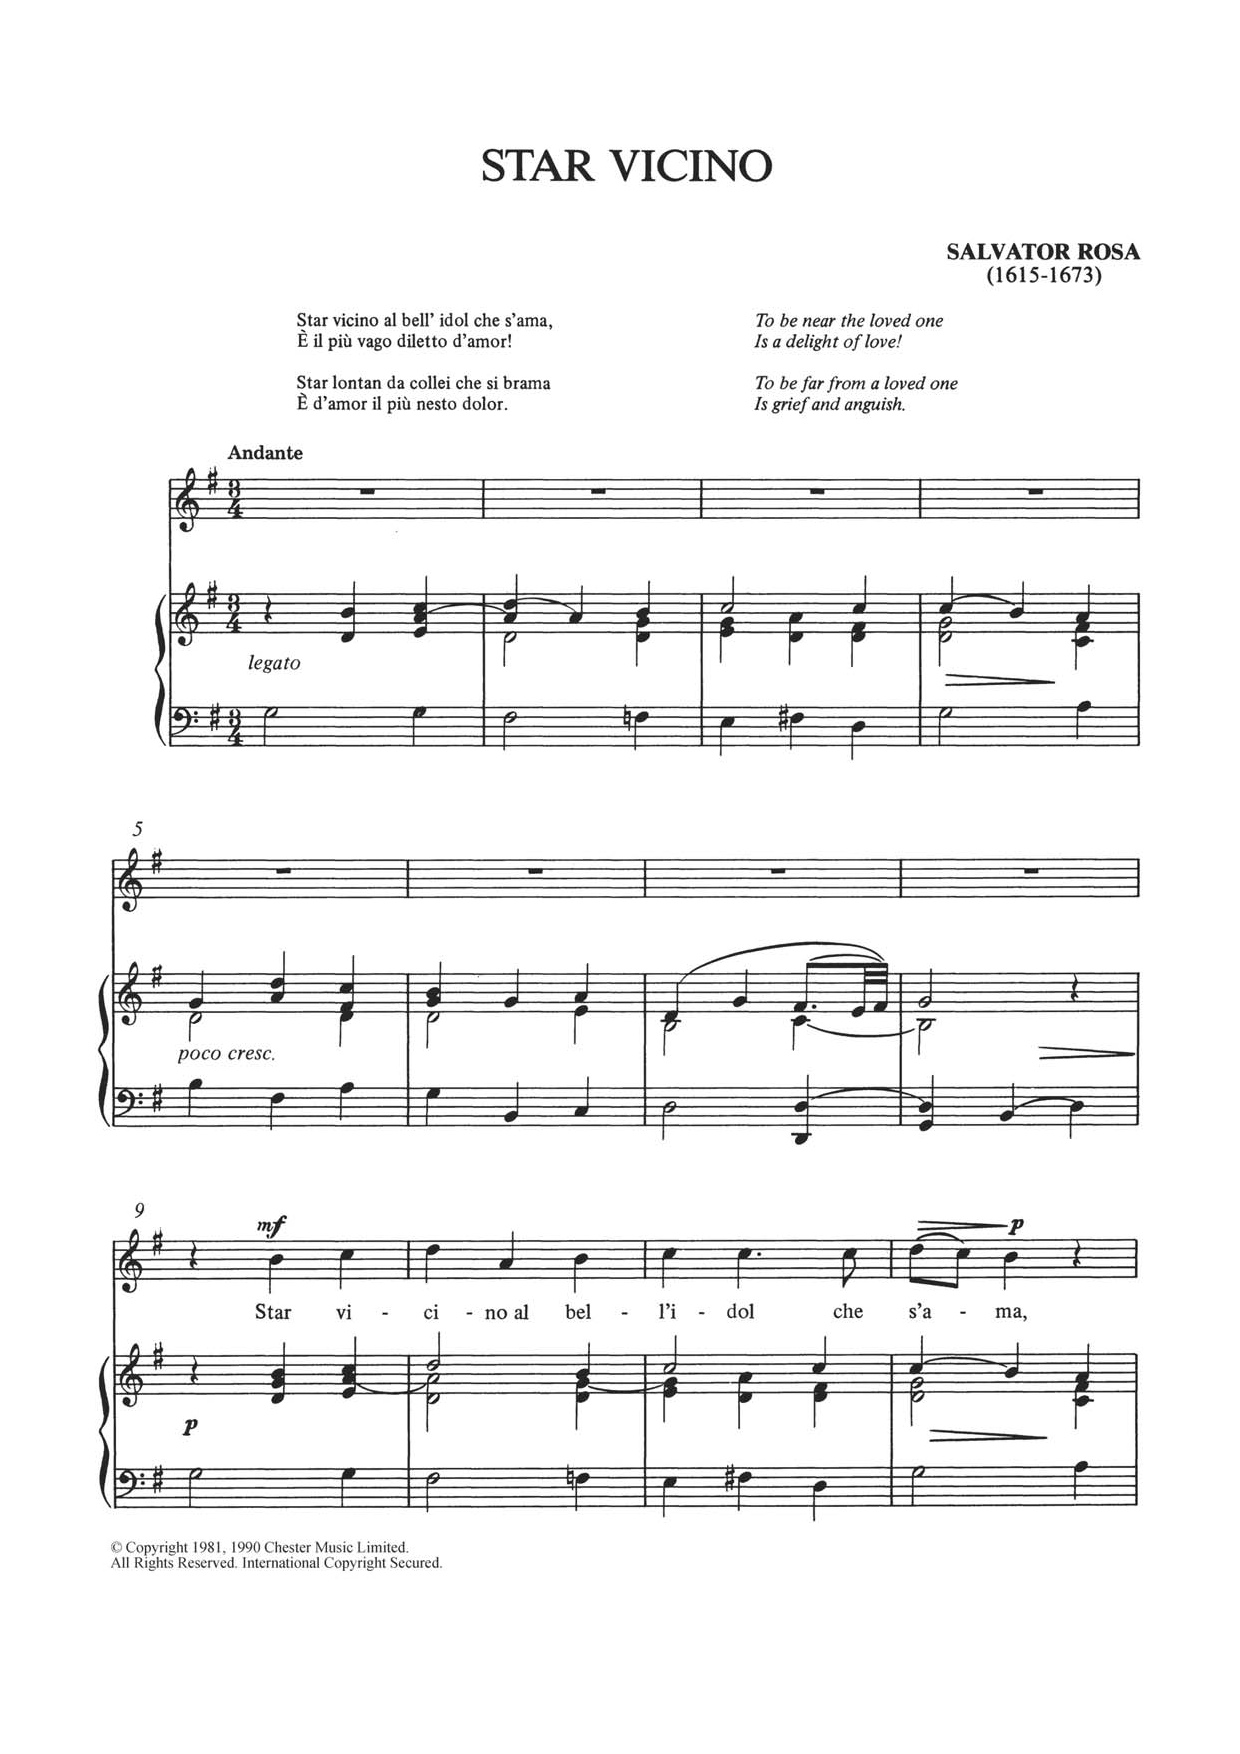 Download Salvator Rosa Star Vicino Sheet Music